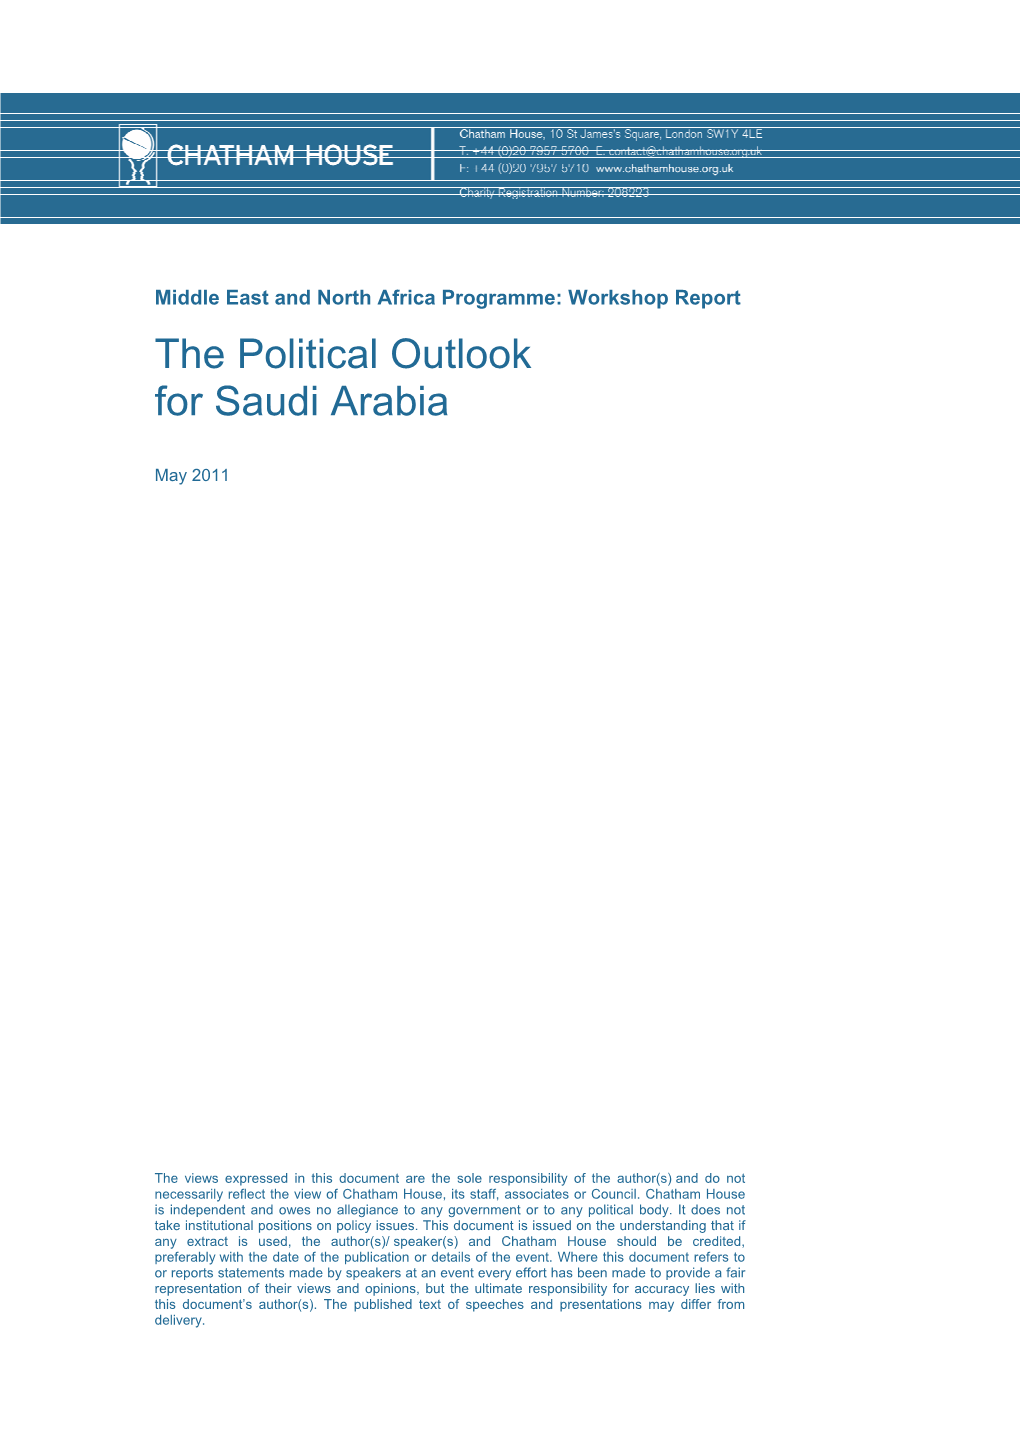 The Political Outlook for Saudi Arabia